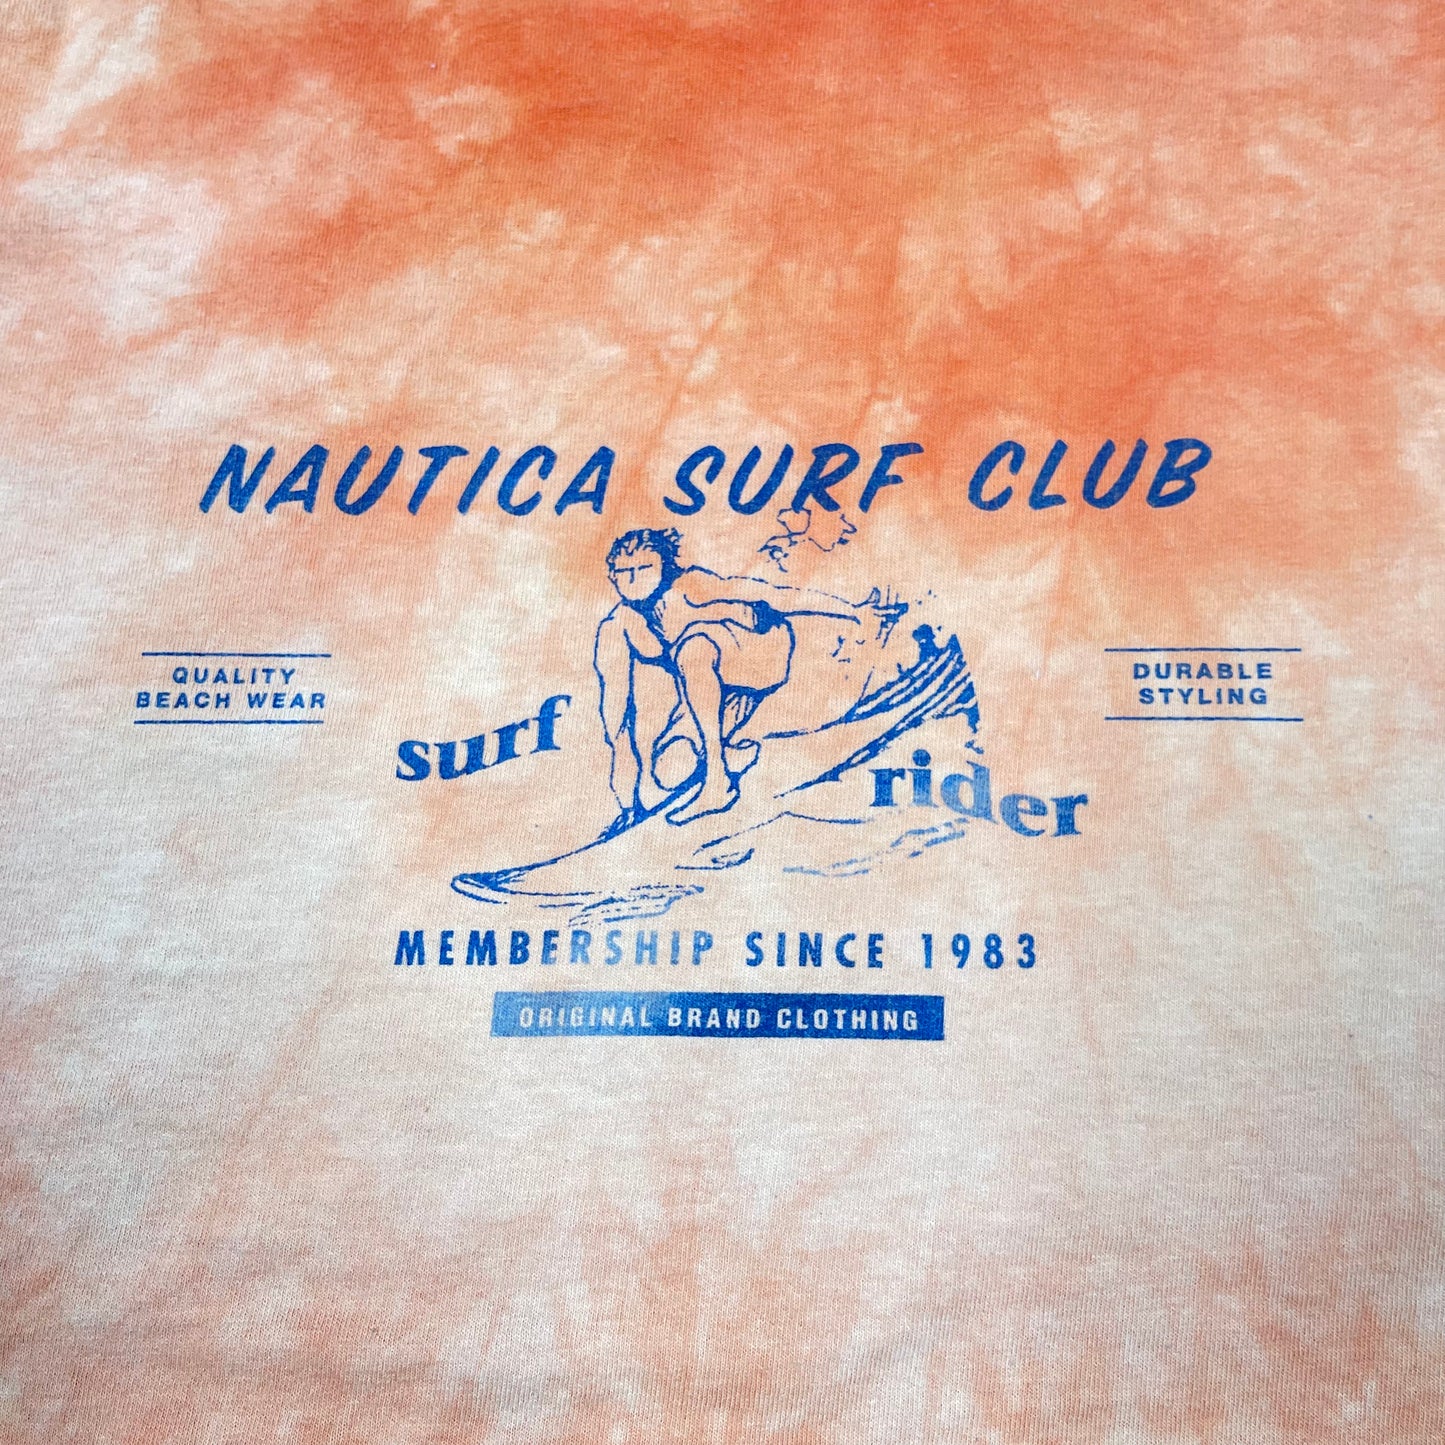 THRIFTED “NAUTICAL SURF CLUB” T-SHIRT